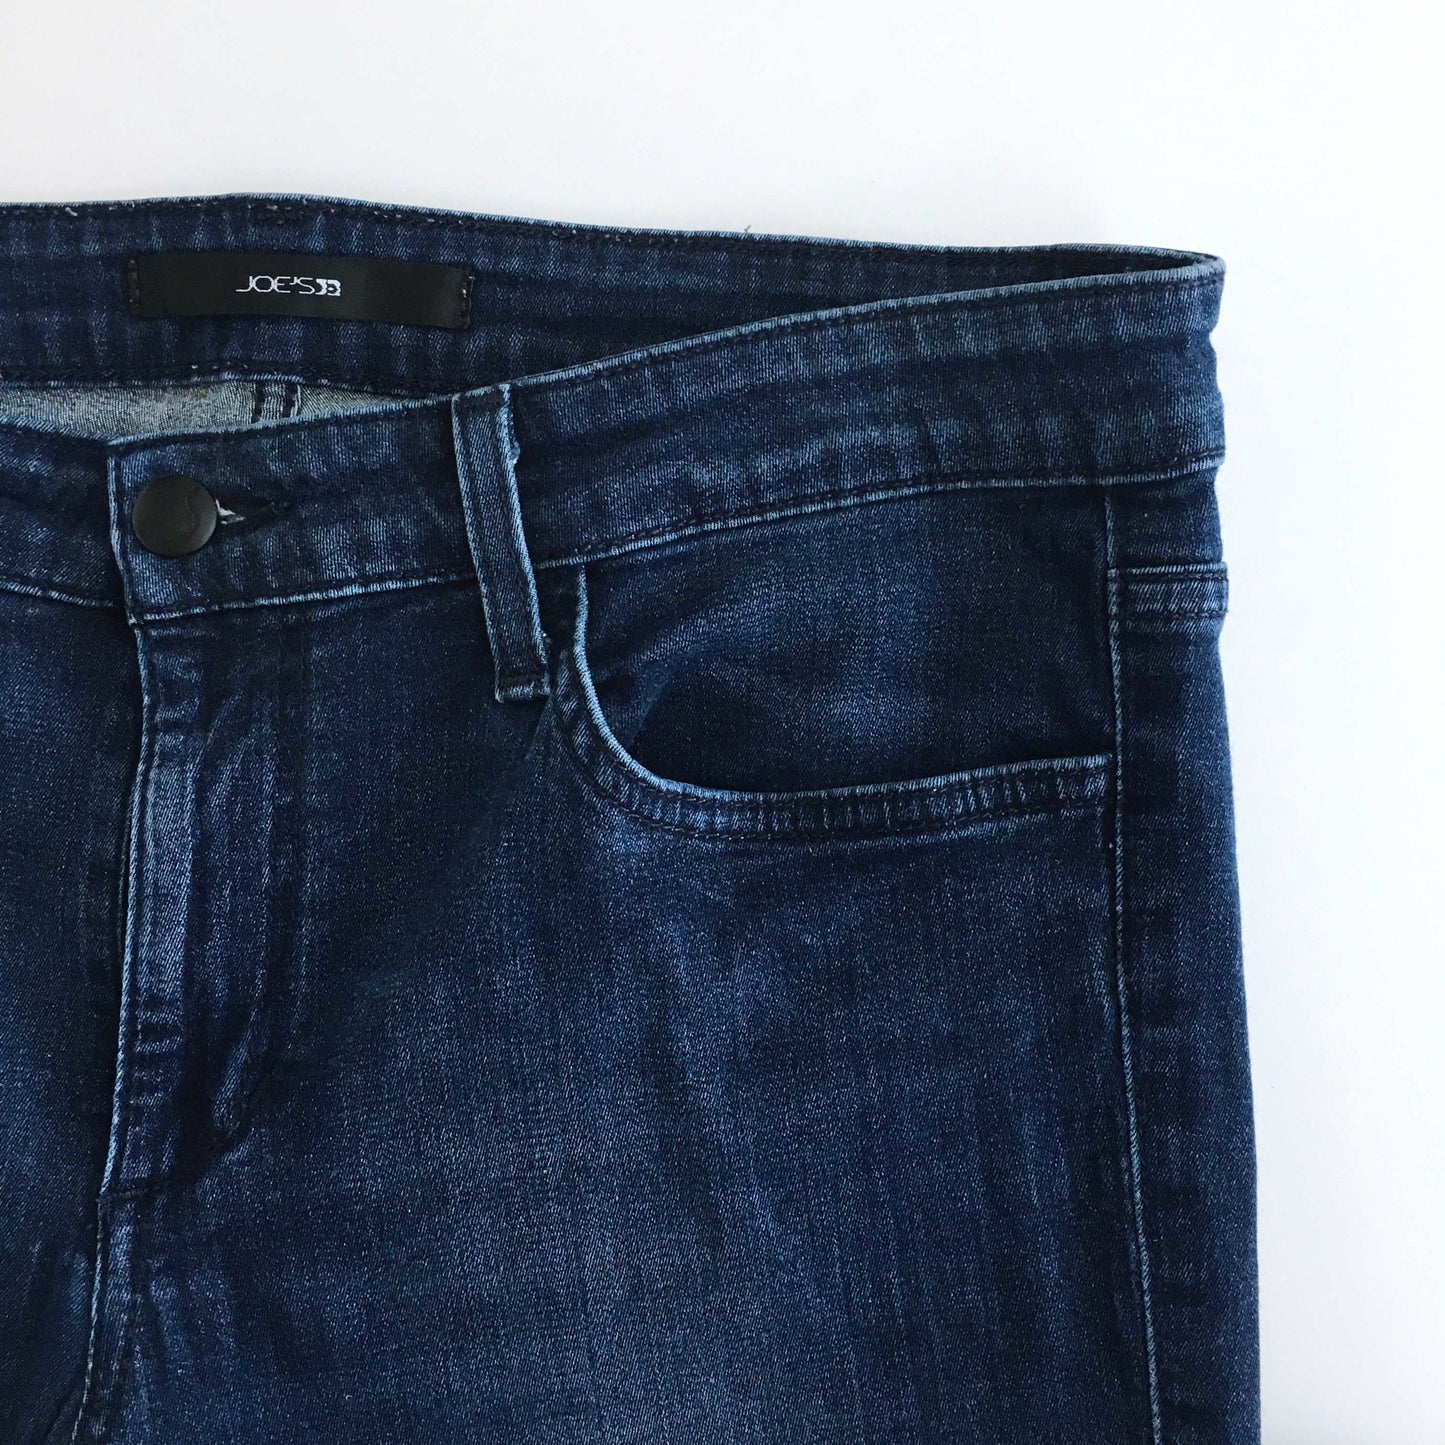 Joe's Jeans Ultra Slim fit skinny jeans - size 30